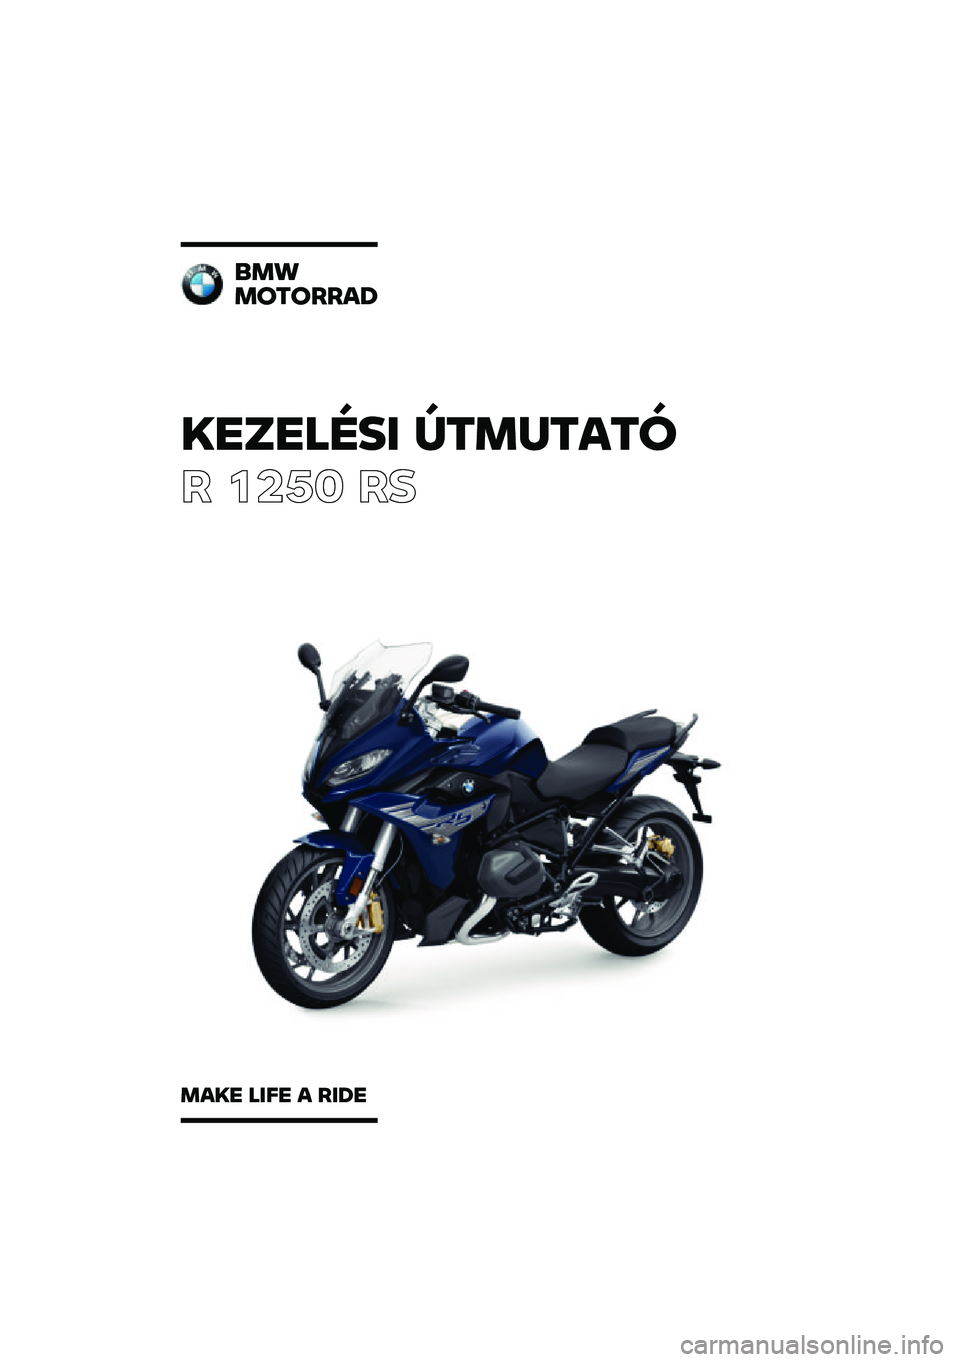 BMW MOTORRAD R 1250 RS 2020  Kezelési útmutató (in Hungarian) �������\b�	 �
�\f�
��\f��\f�
� ����	 ��
��
�
�
��\f�����
�
��� ��	�� � ��	�� 